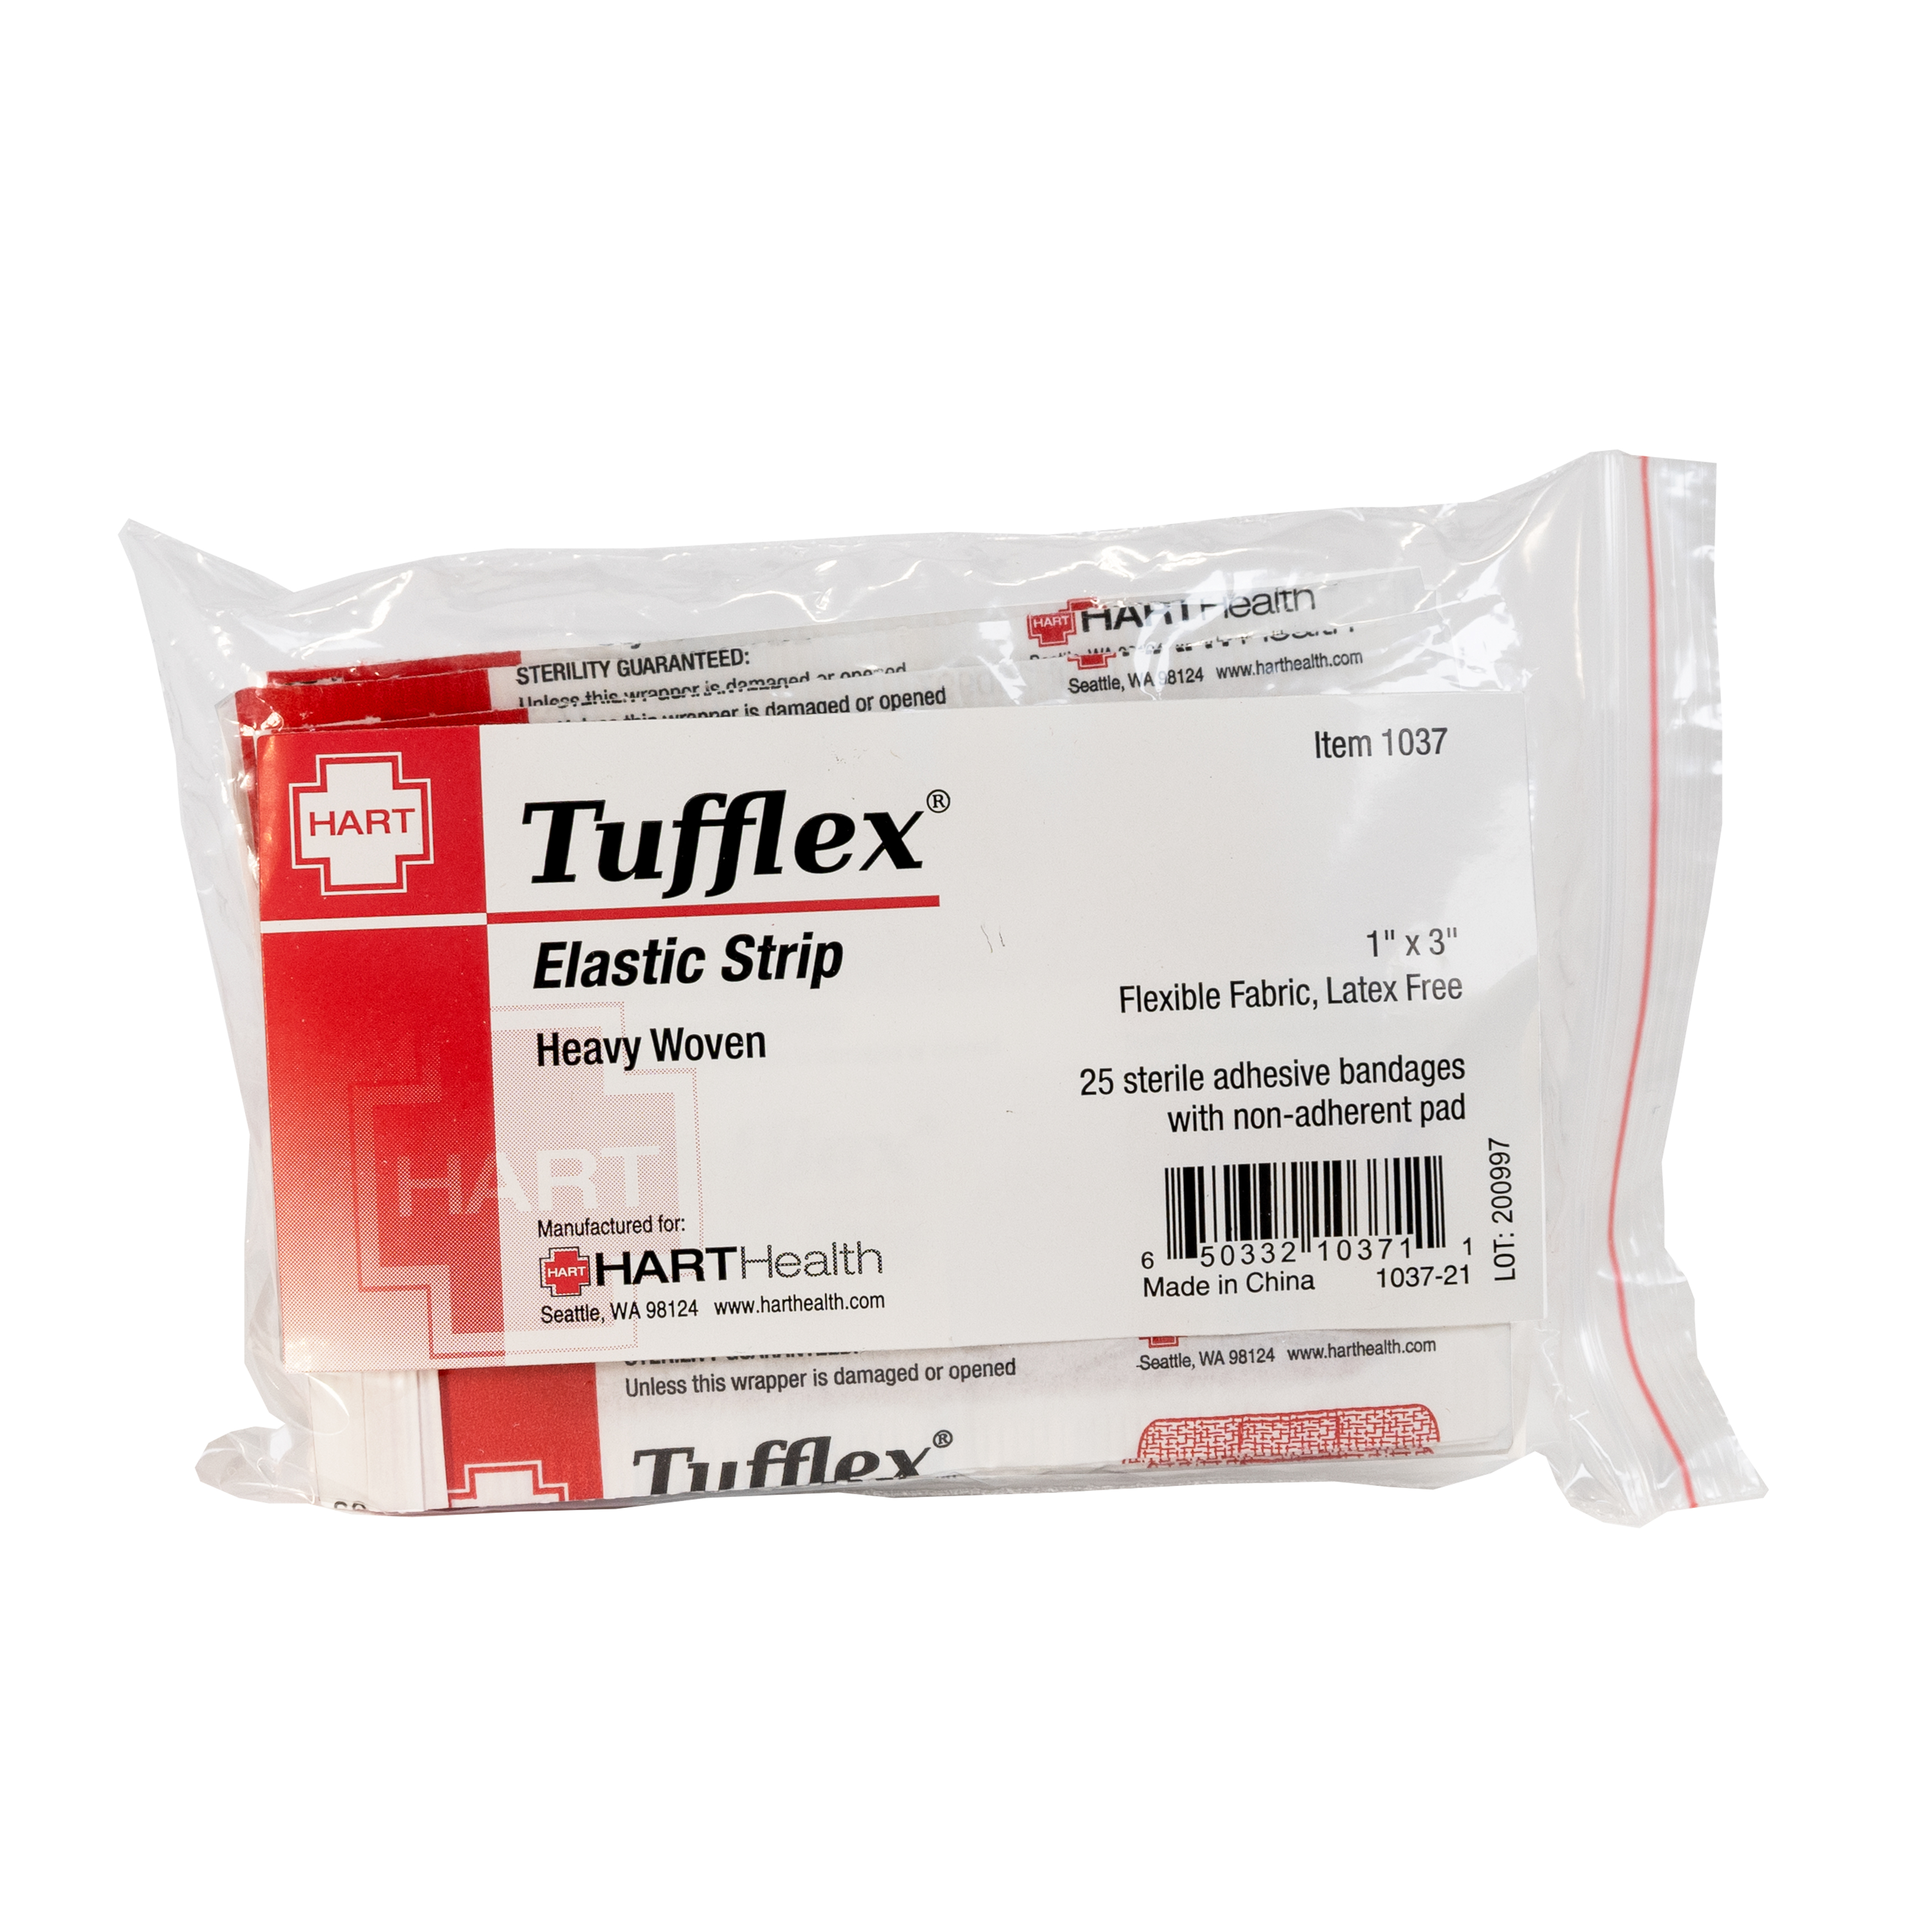 Tufflex, Elastic Strip Adhesive Bandages, Heavy Woven Cloth, 1' x 3', 25 per bag